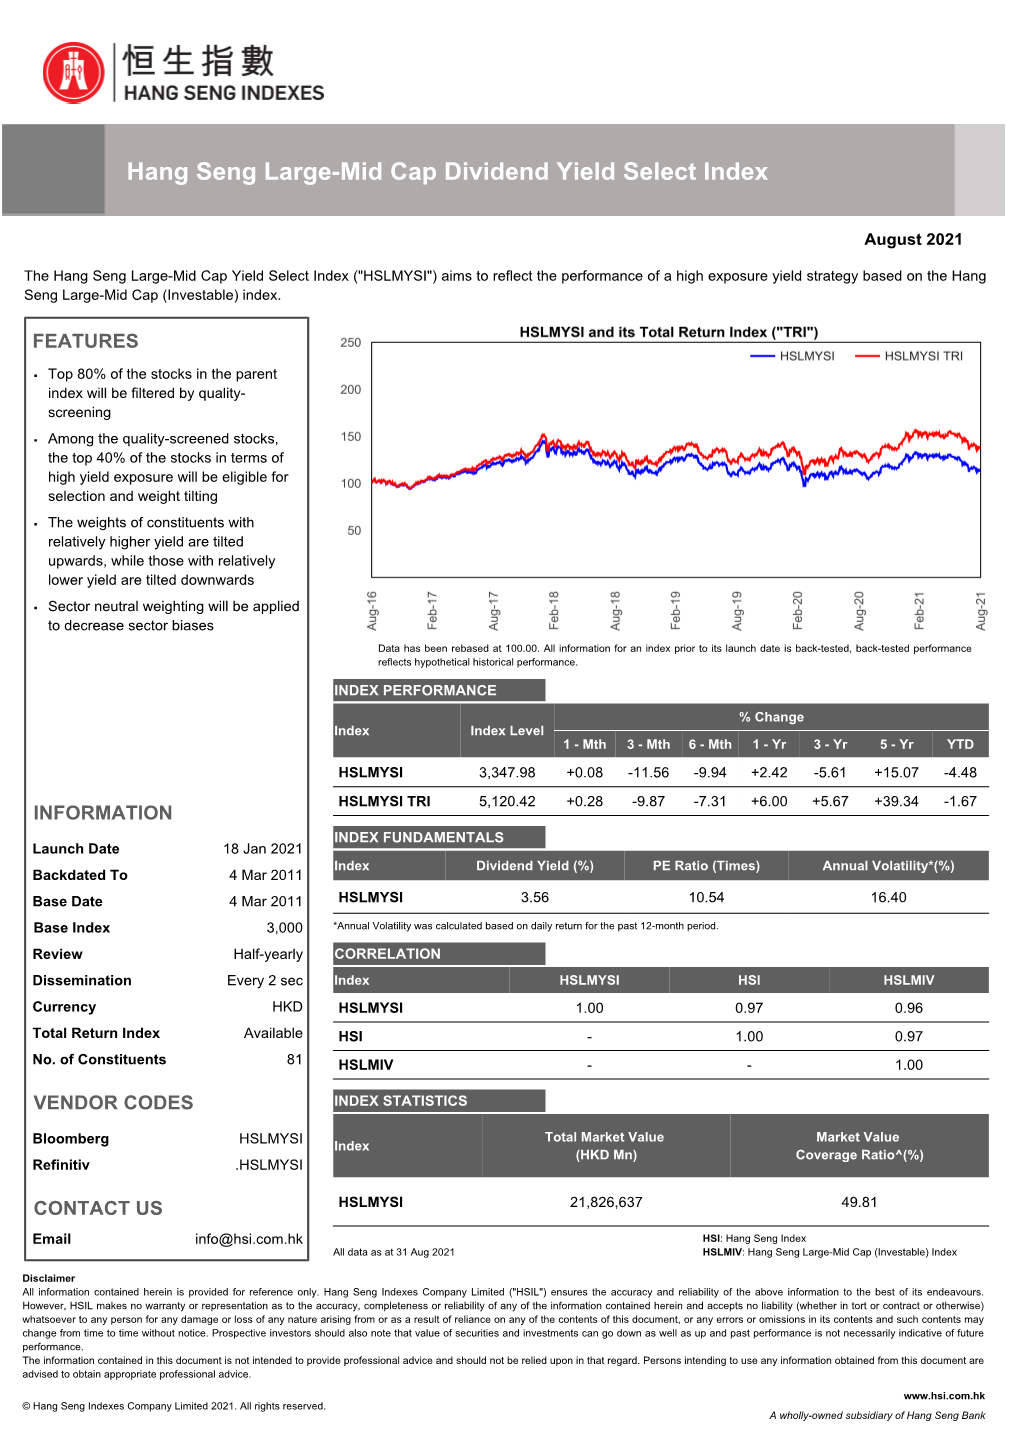 Hang Seng Large-Mid Cap Dividend Yield Select Index View